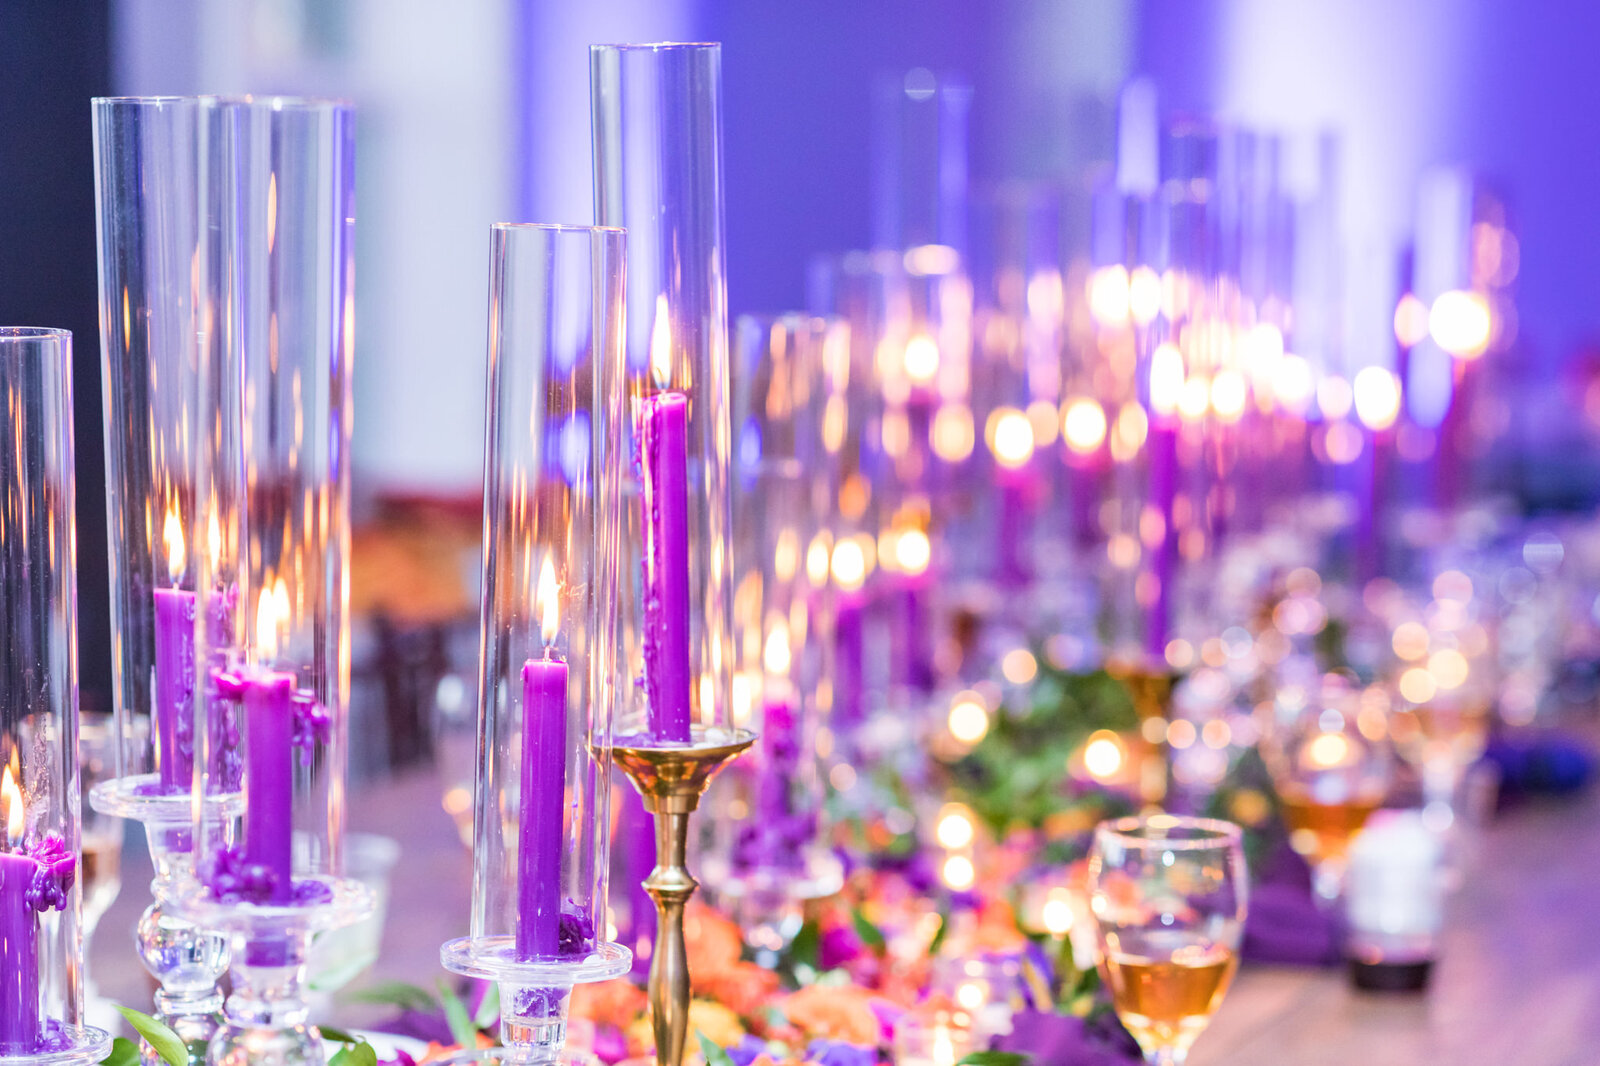 Candles adorn tables at wedding reception.